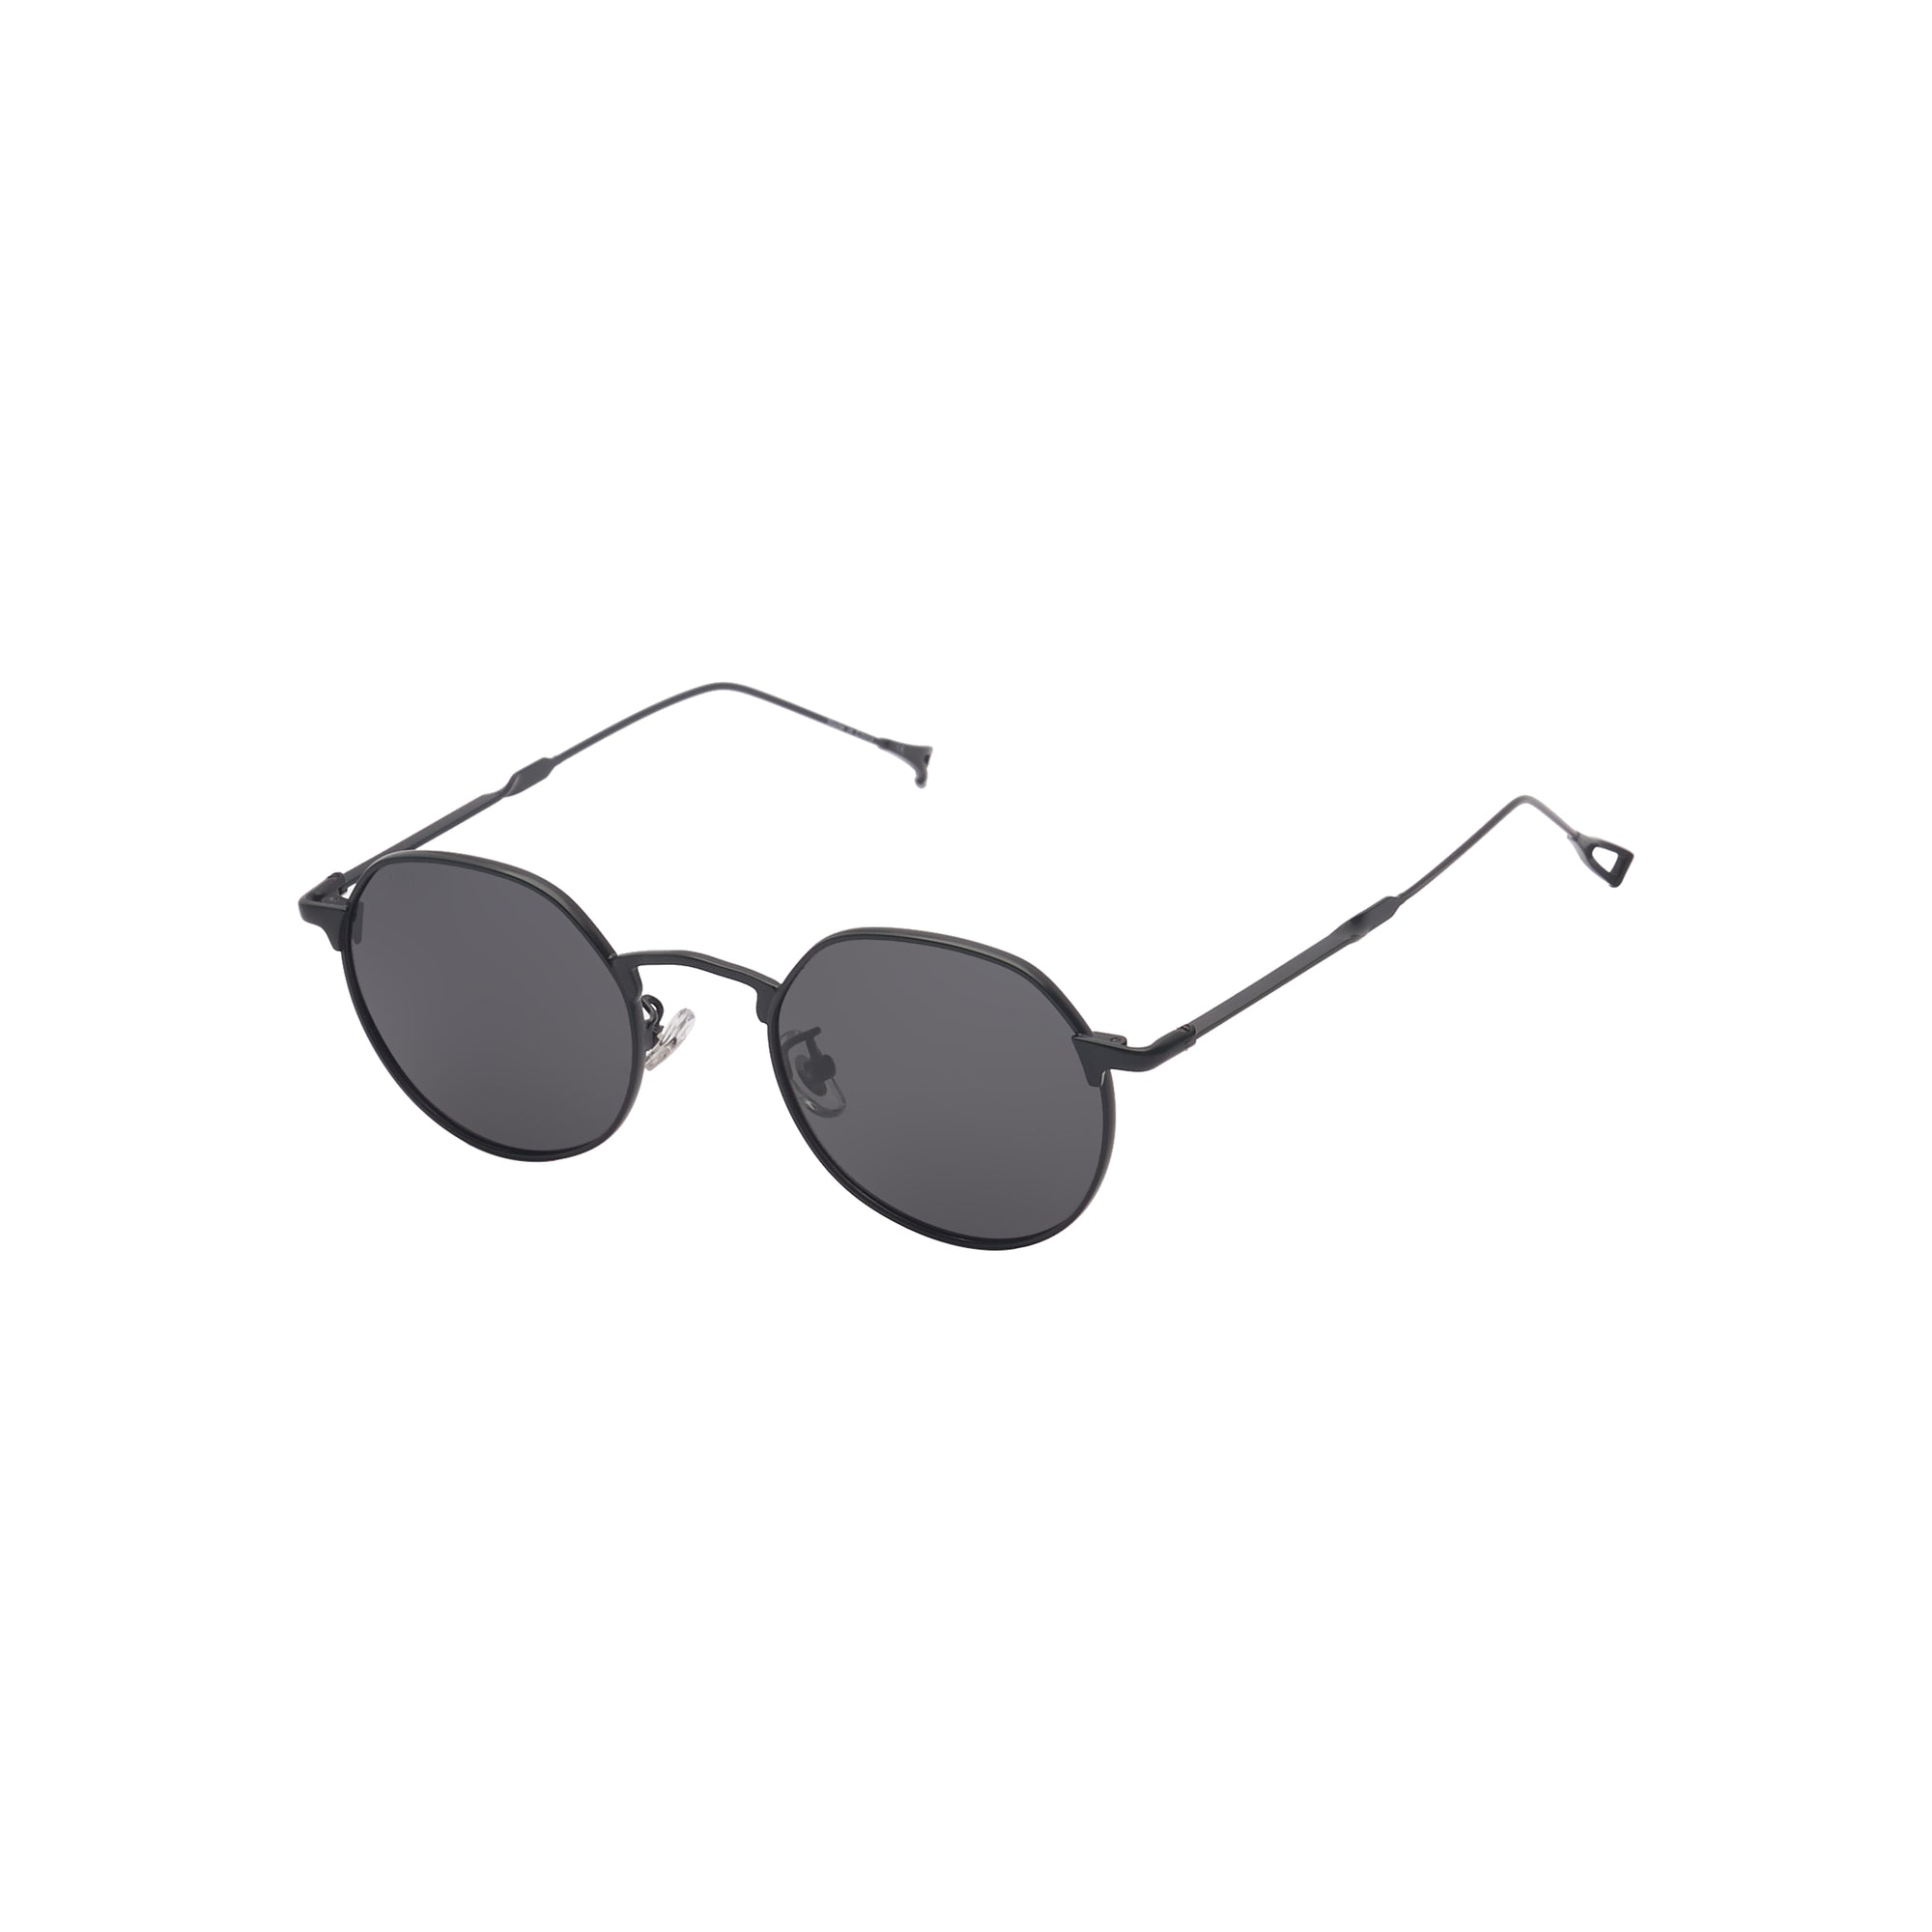 DOCOMO Sunglasses USUVU Sunglasses shades shade kuwait summer trolley @trolleyKW ترولي نظارات نظارة الكويت كويت شمس